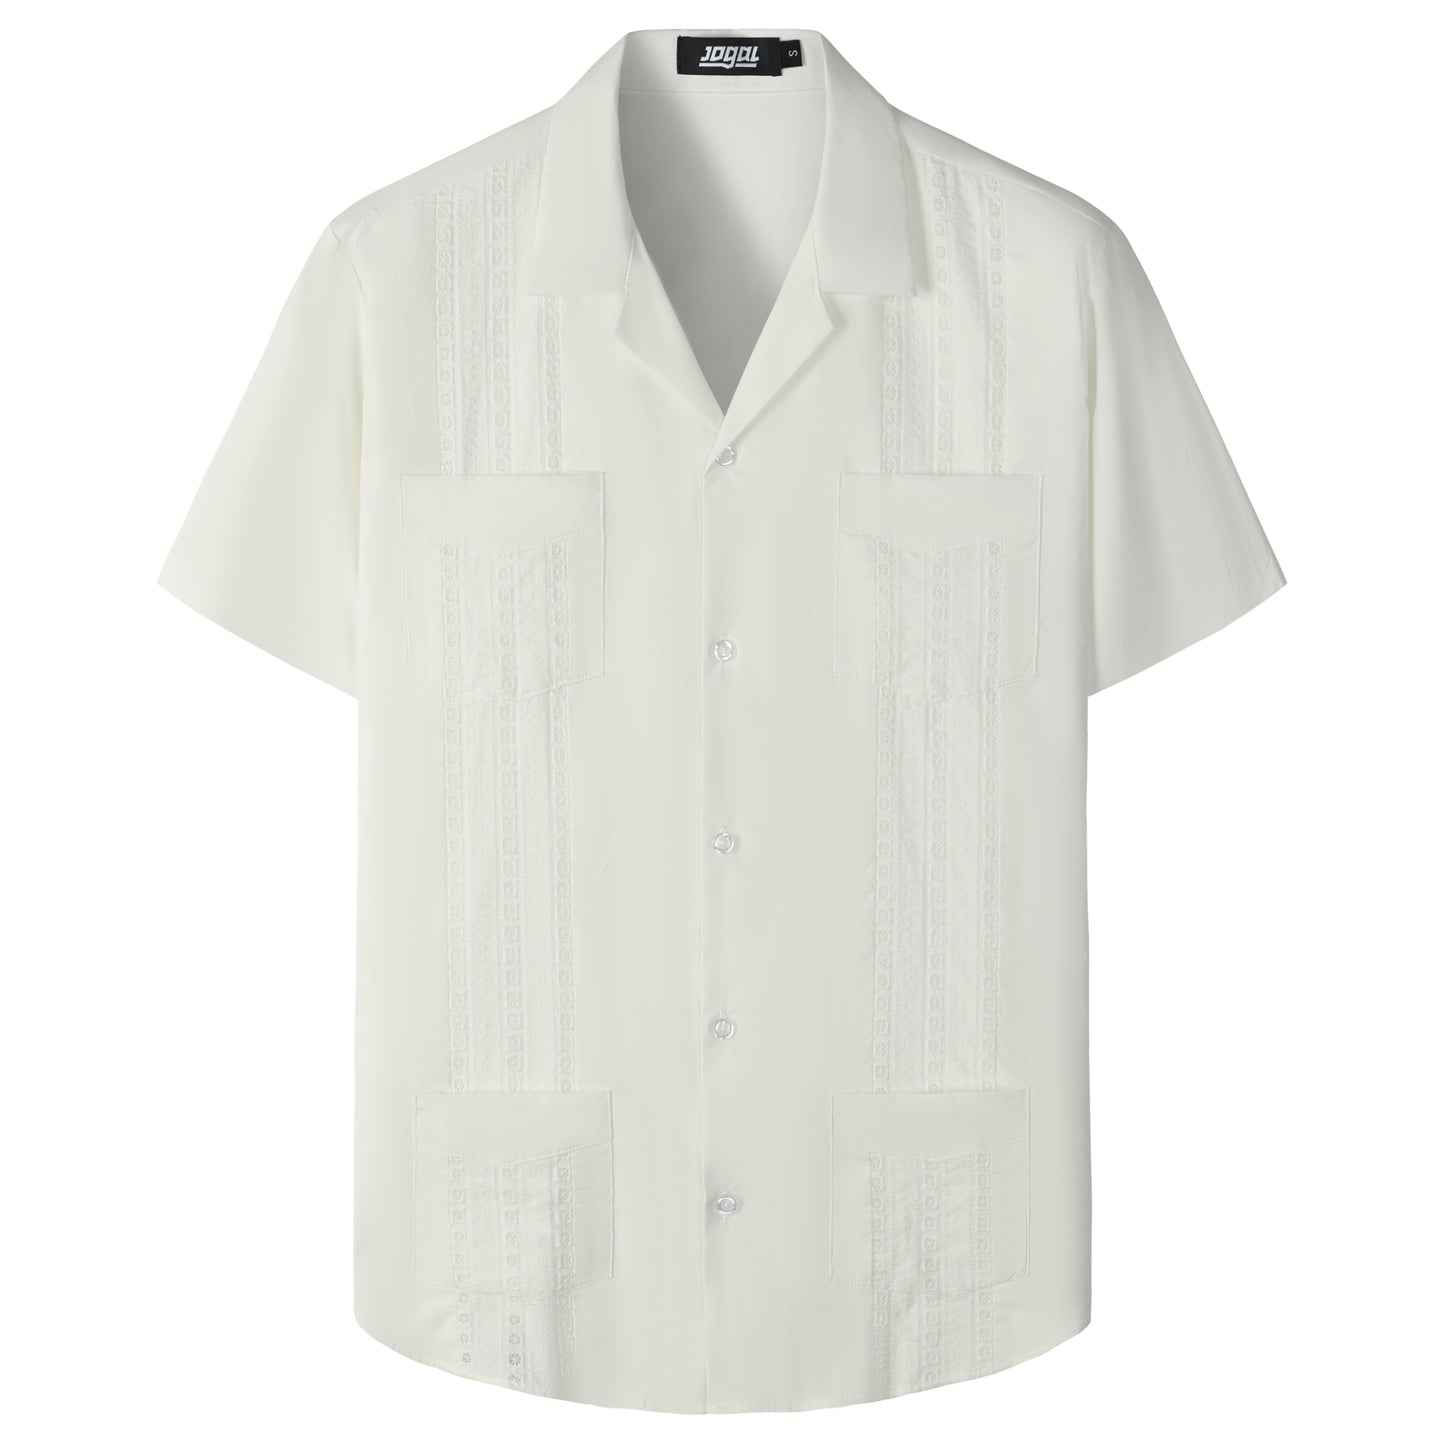 JOGAL Mens Guayabera Shirts Cuban Short Sleeve Casual Button Down Beach Shirt